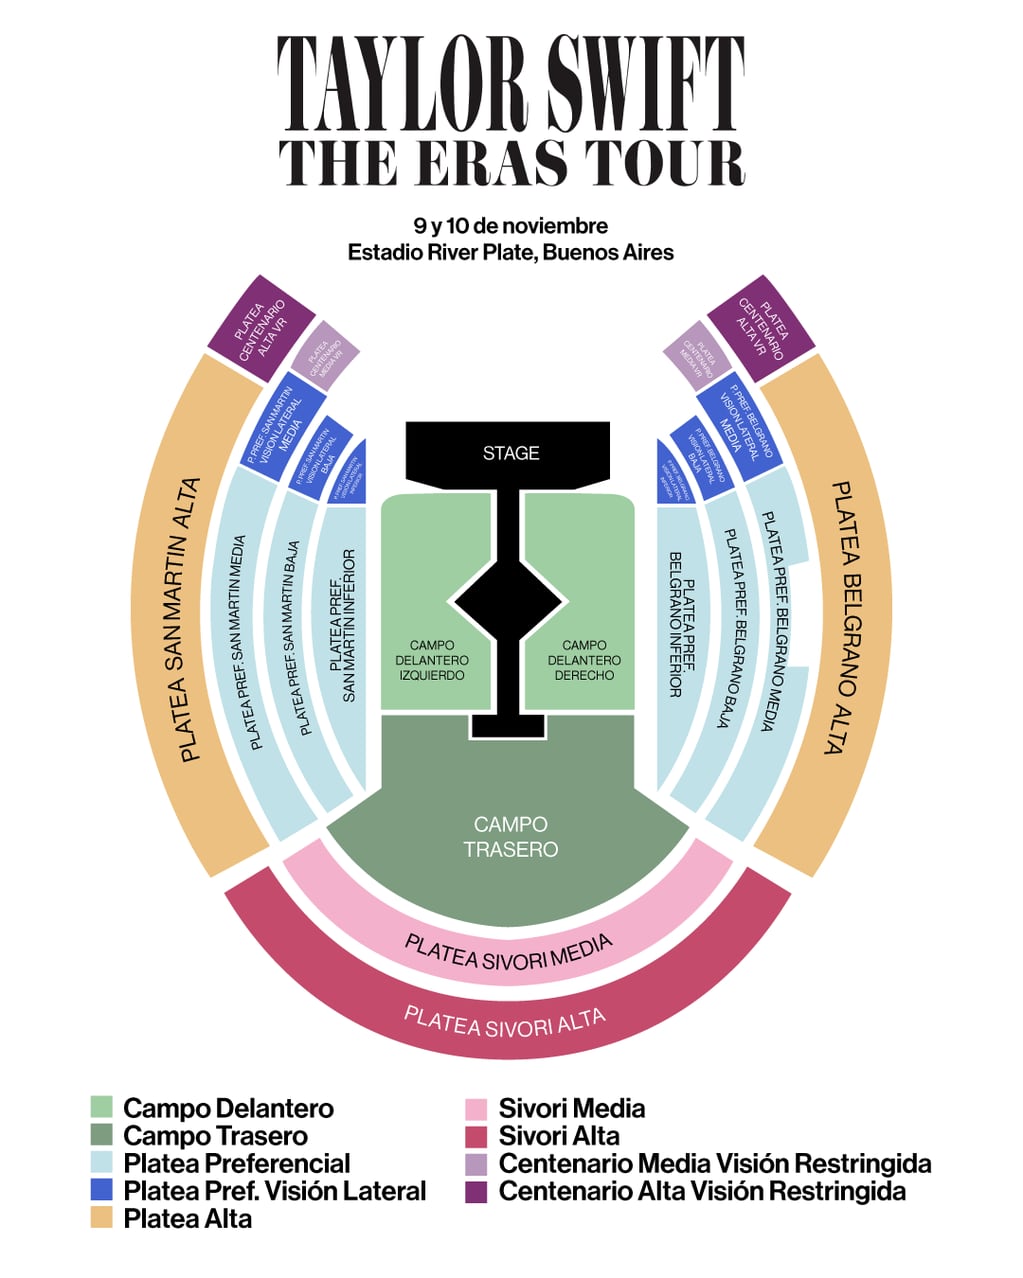 El mapa del estadio de "The Era Tour"